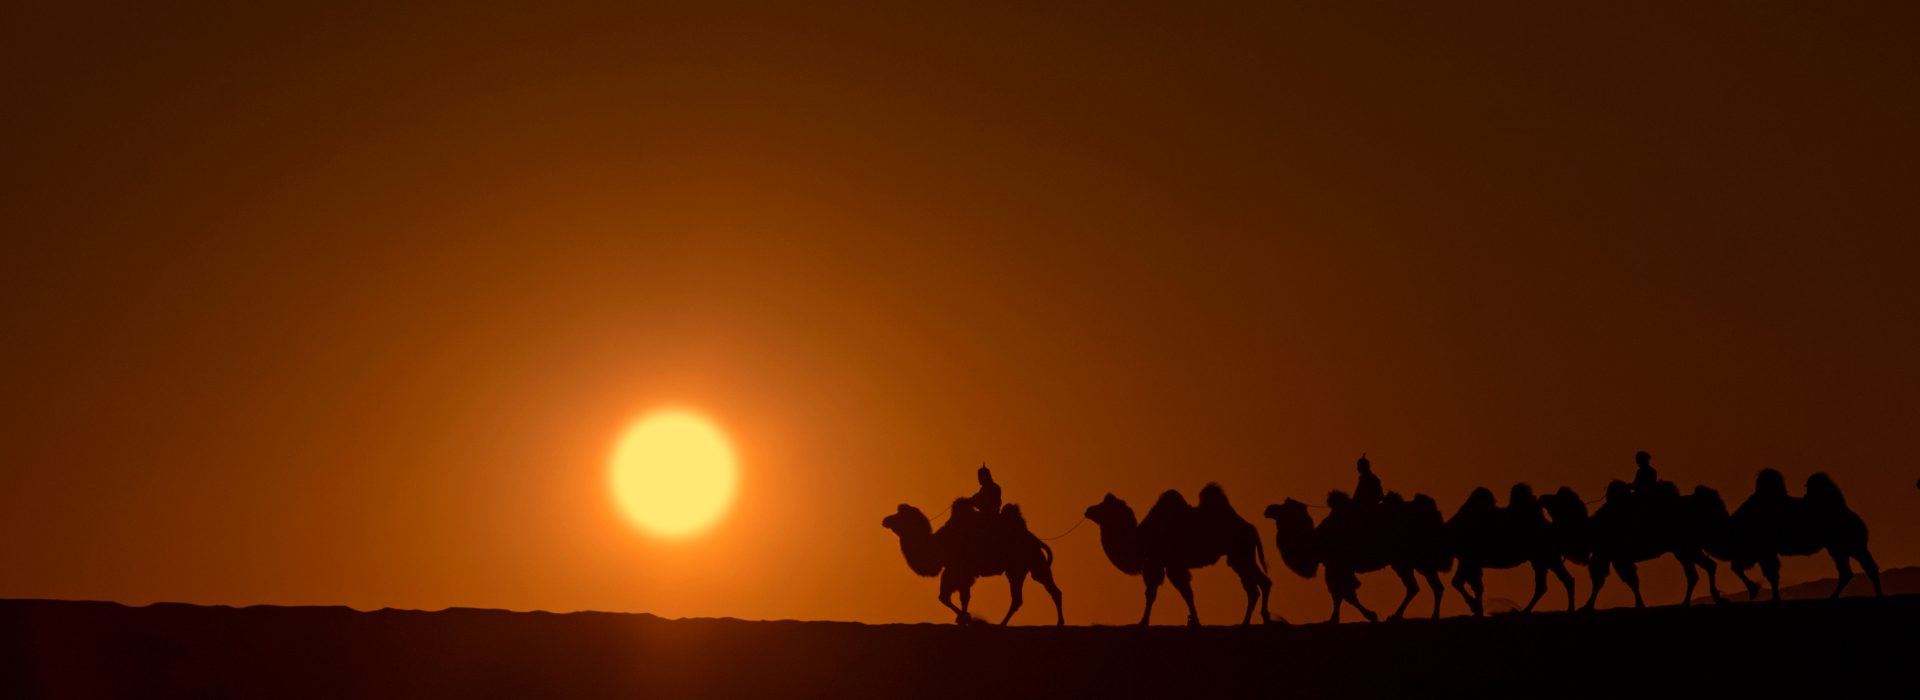 Camel-Caravan-2-1.jpg